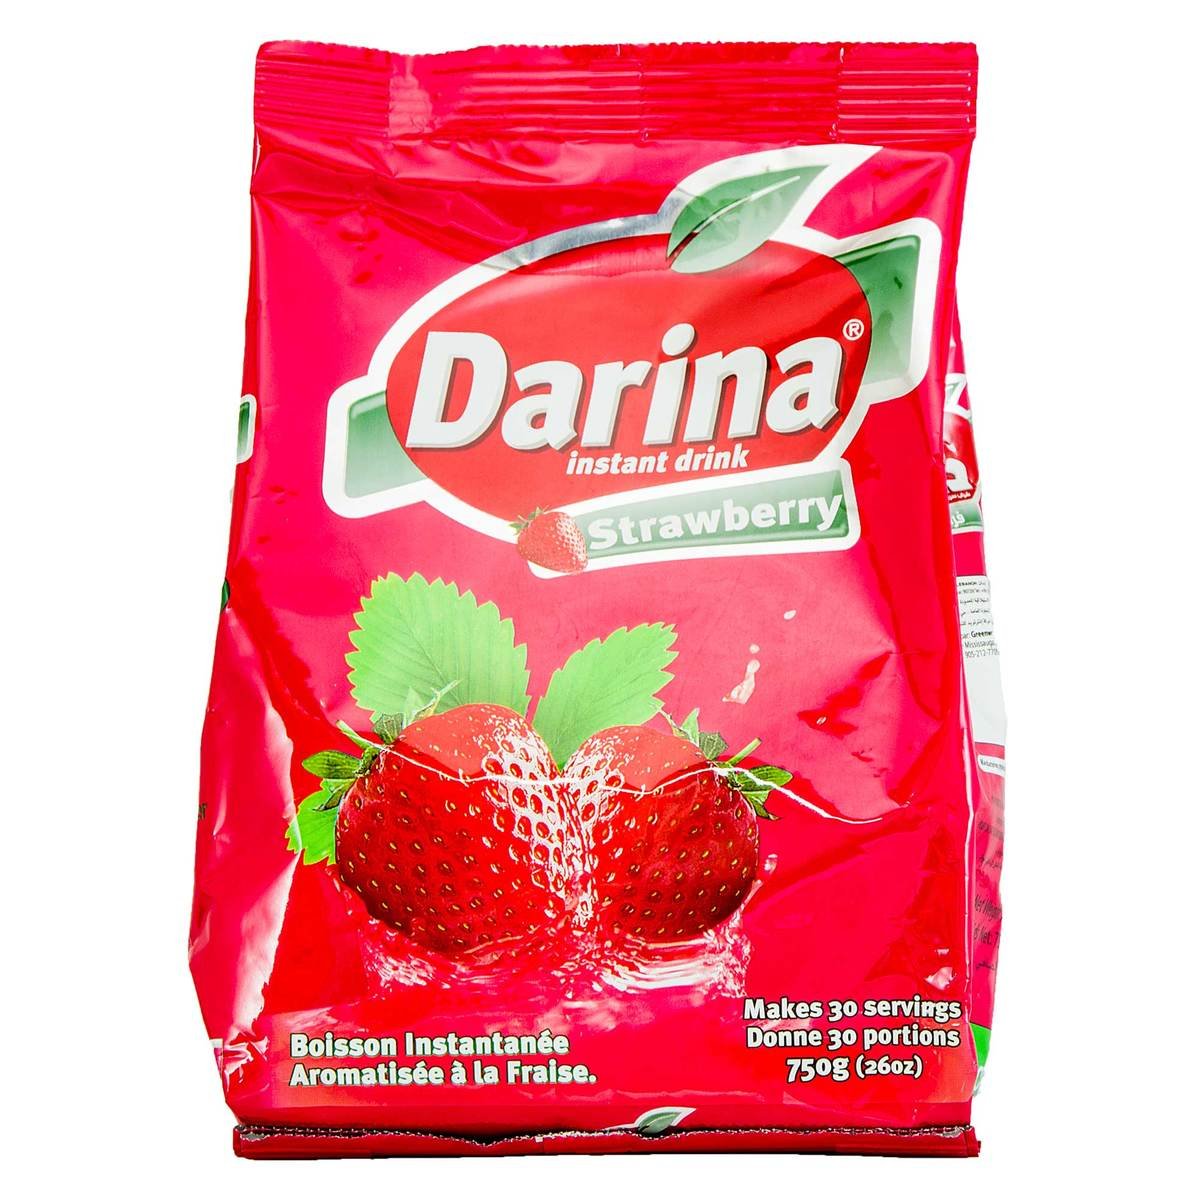 Darina Instant Drink Strawberry 750g